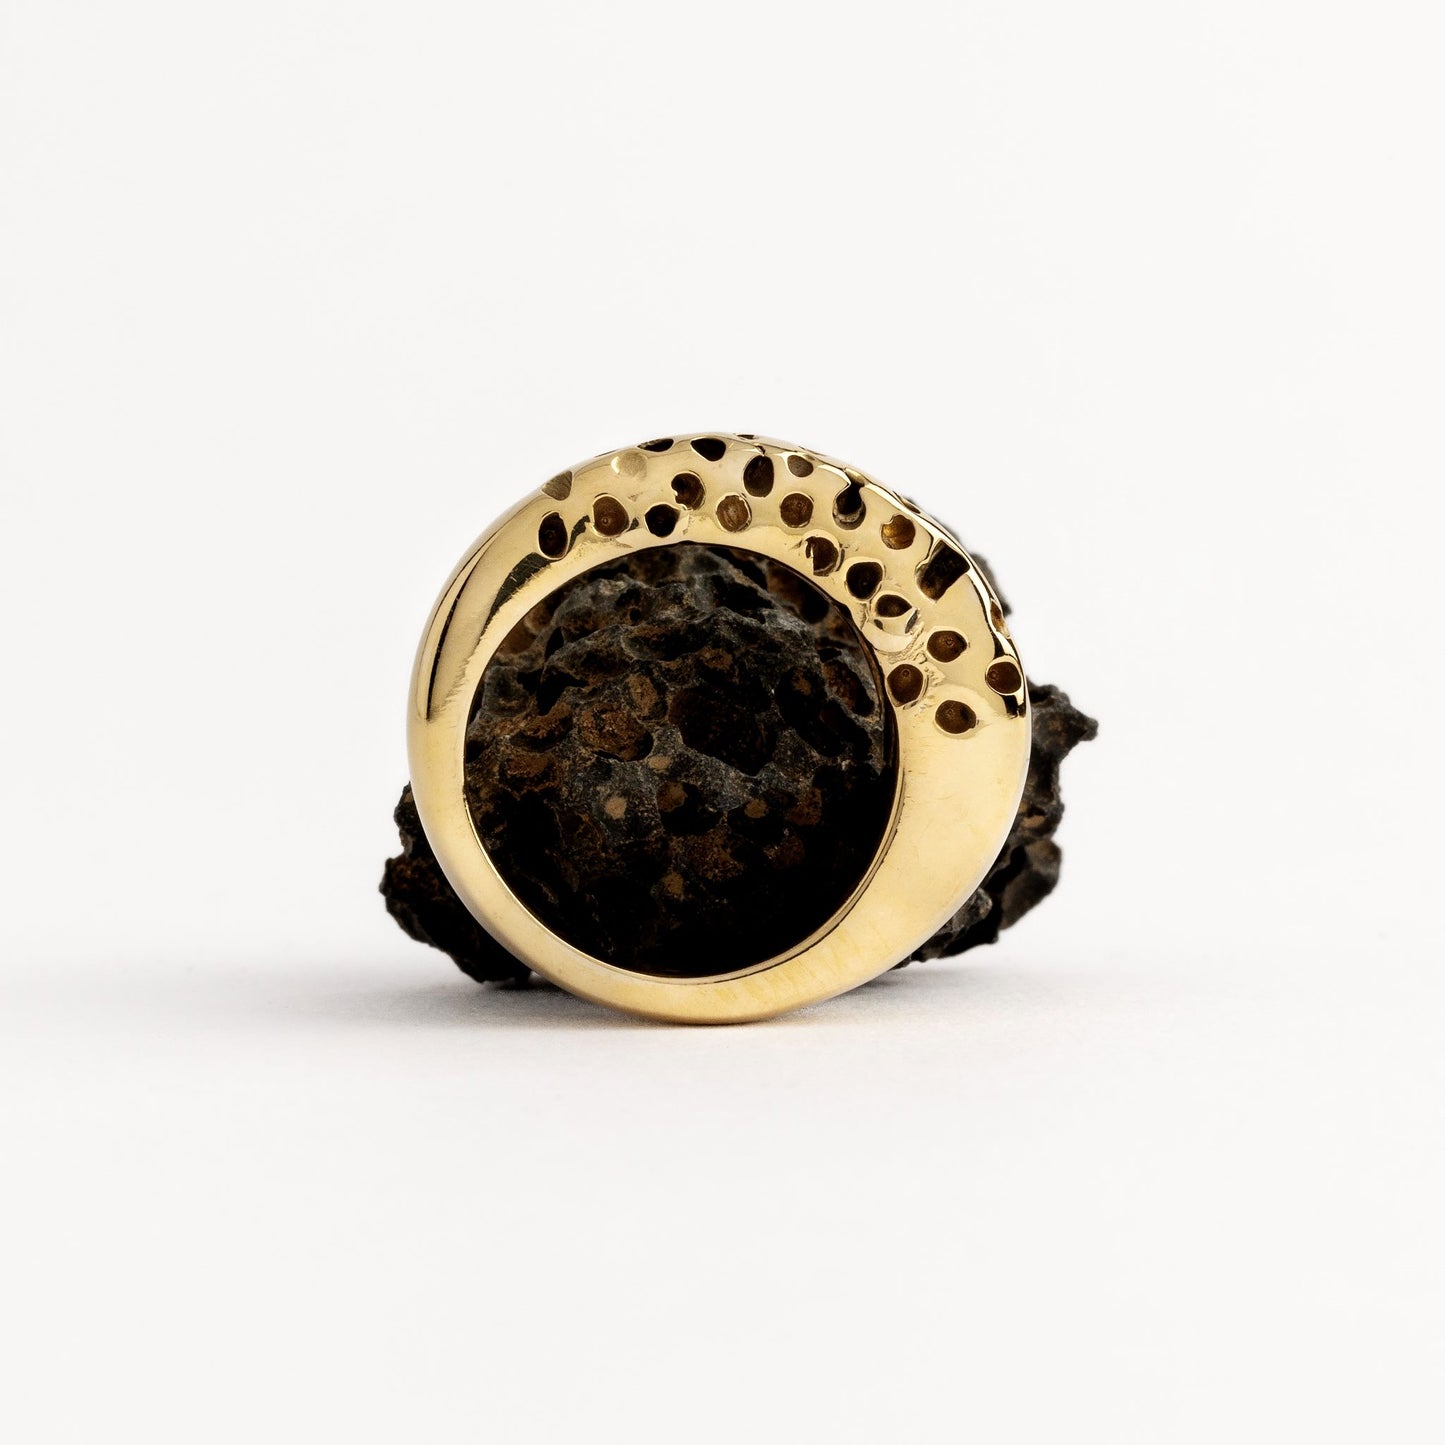 bronze ring handmade by ester studio photo by stefania meli